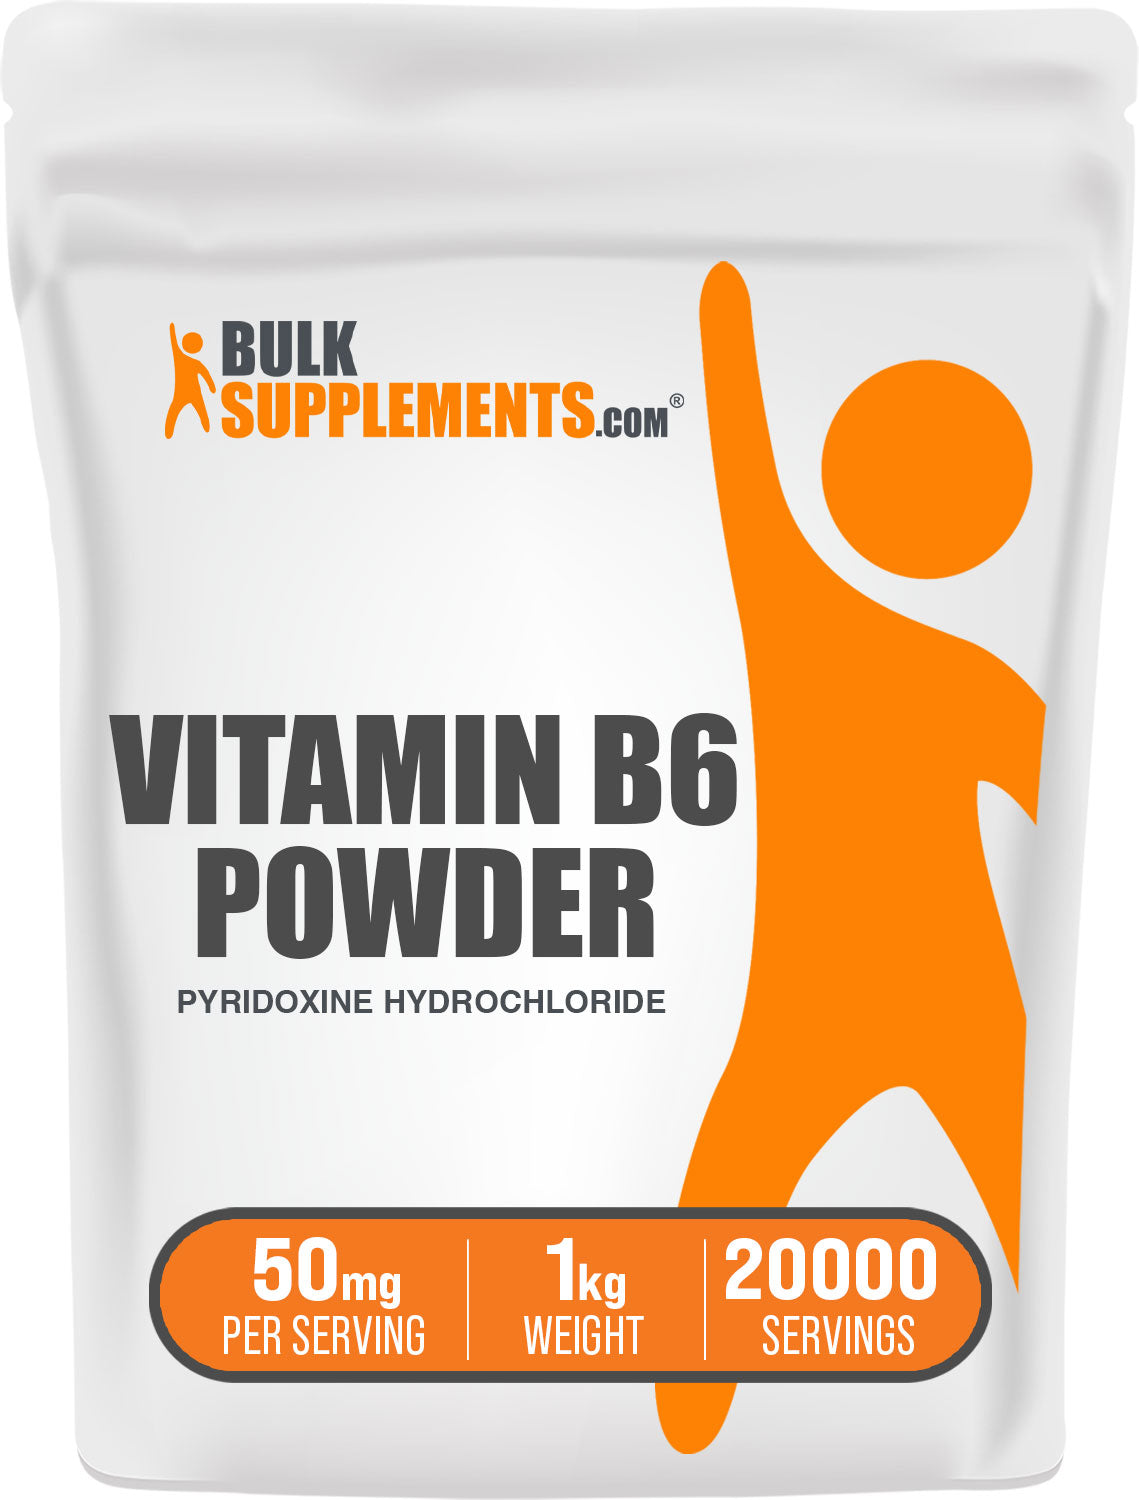 BulkSupplements Vitamin B6 Powder Pyridoxine Hydrochloride 1kg bag